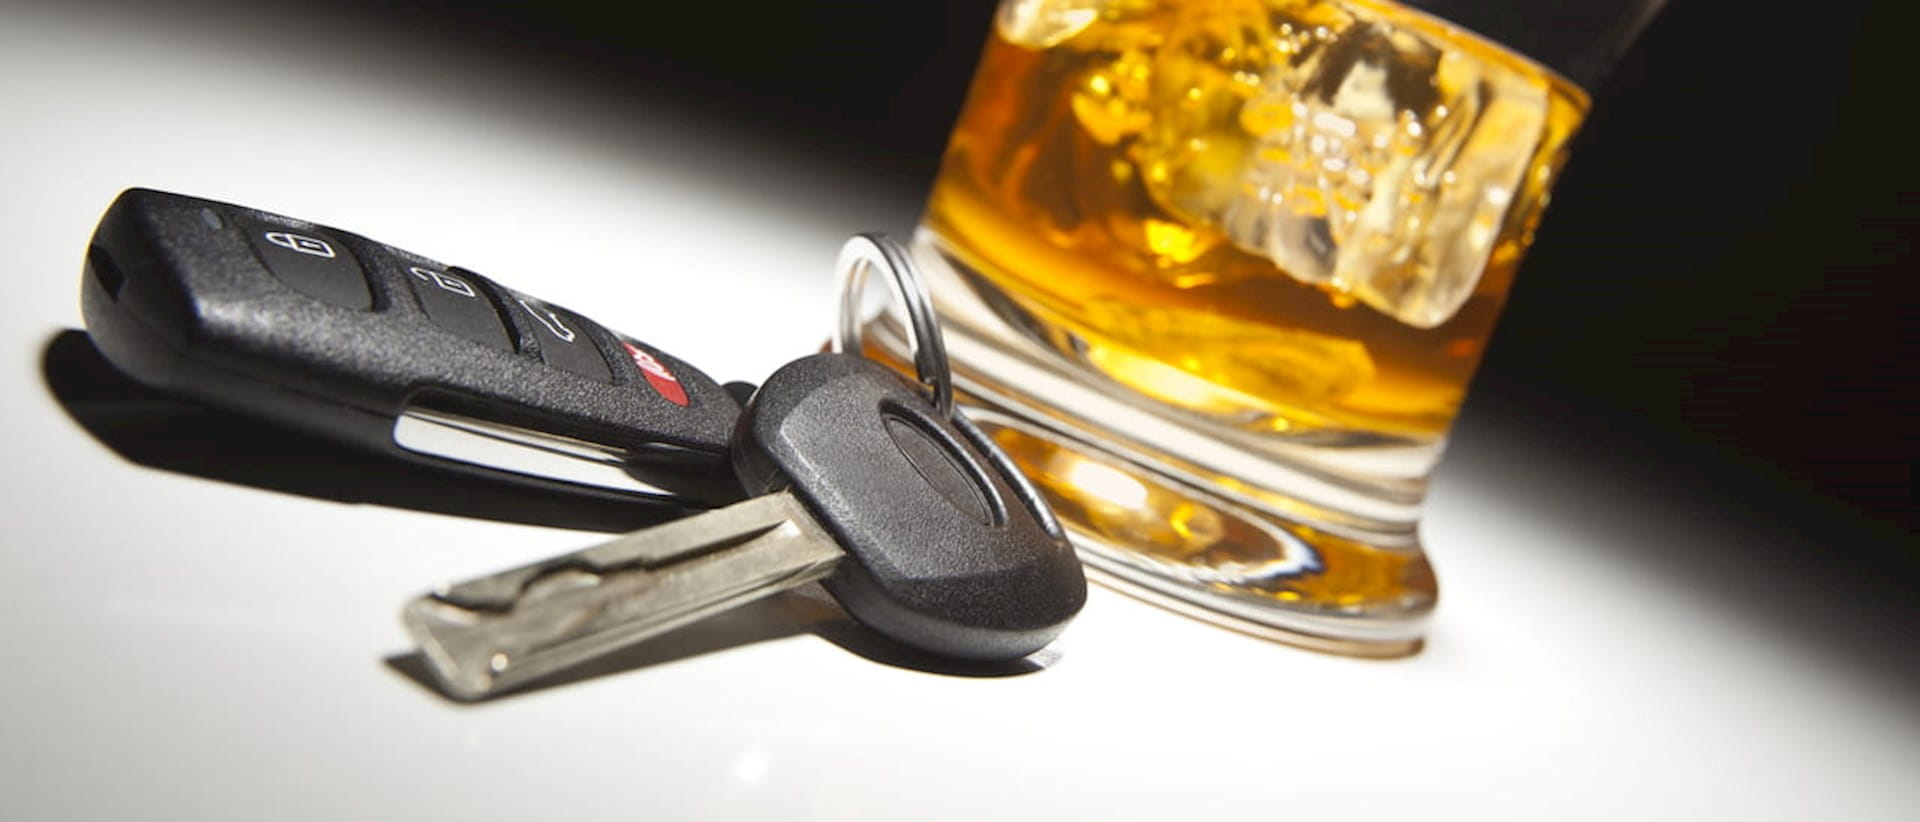 Car keys and a whisky glass